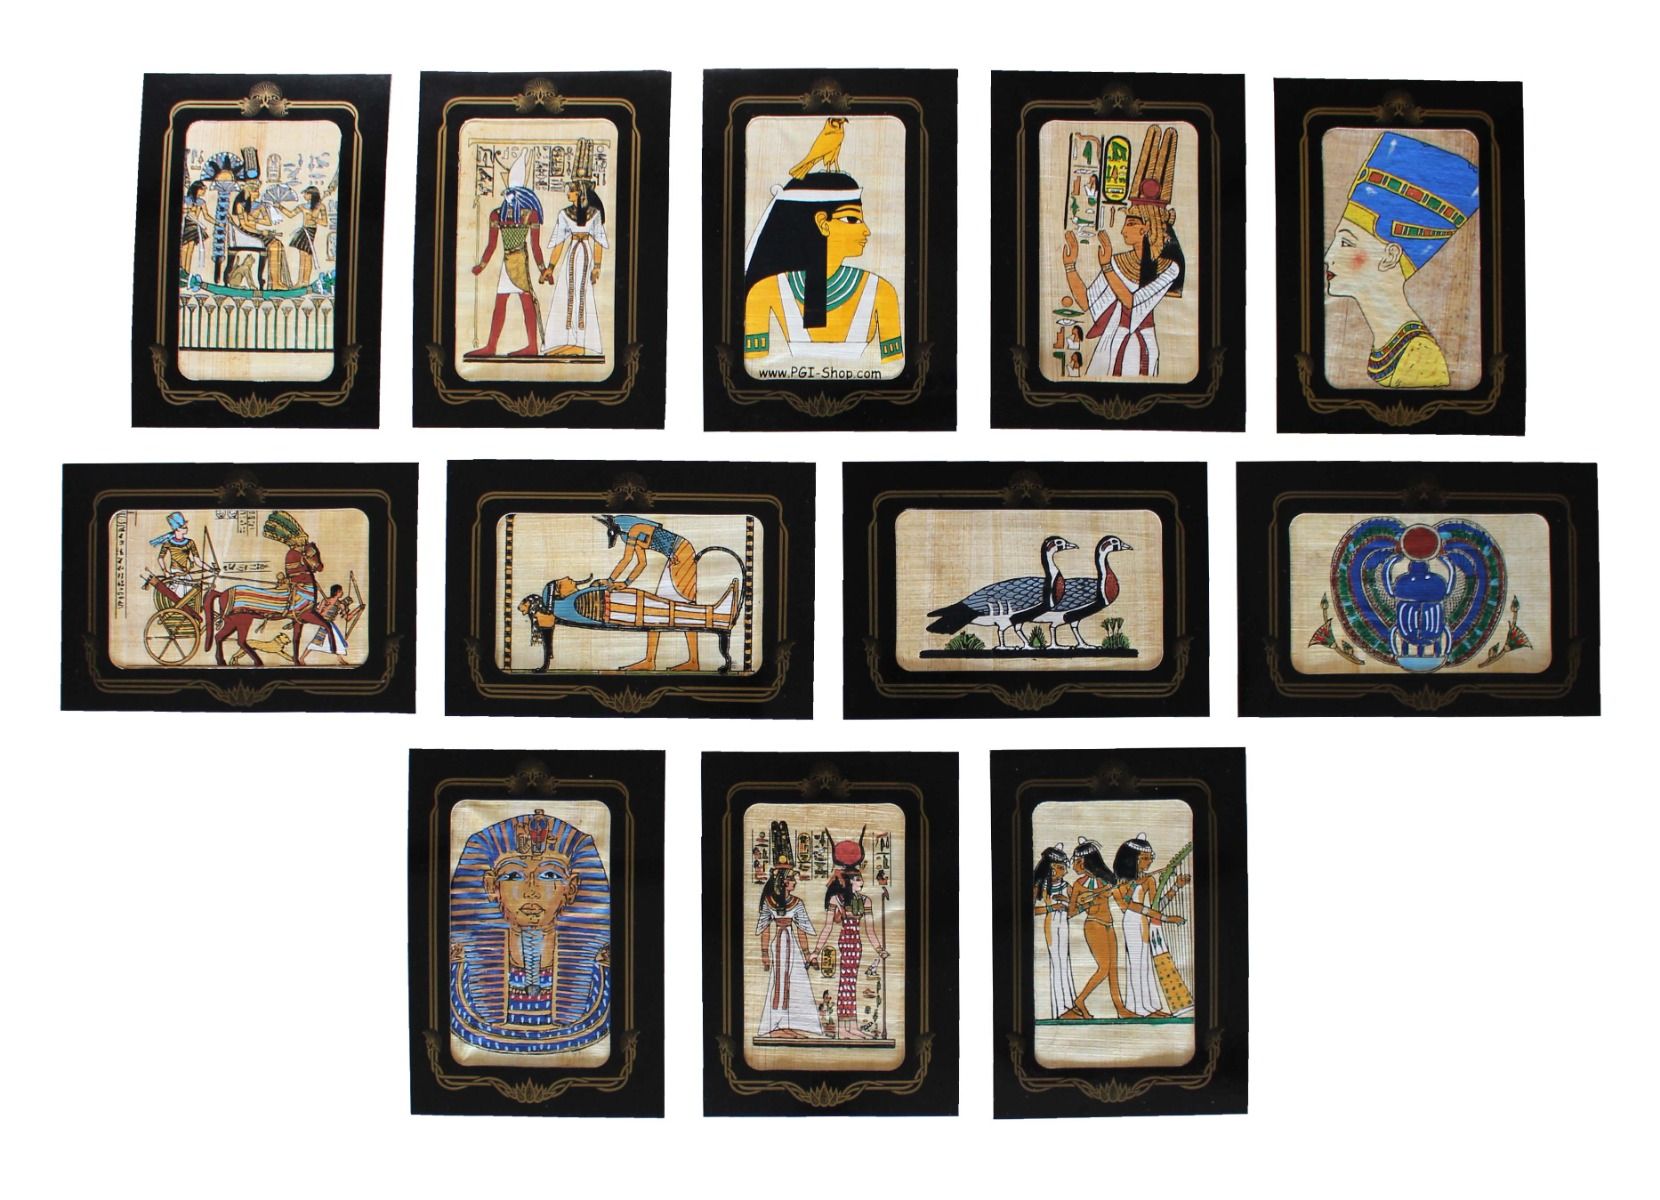 Papyrus Mini-Galerie - komplette "Mini-Galerie" bemalt